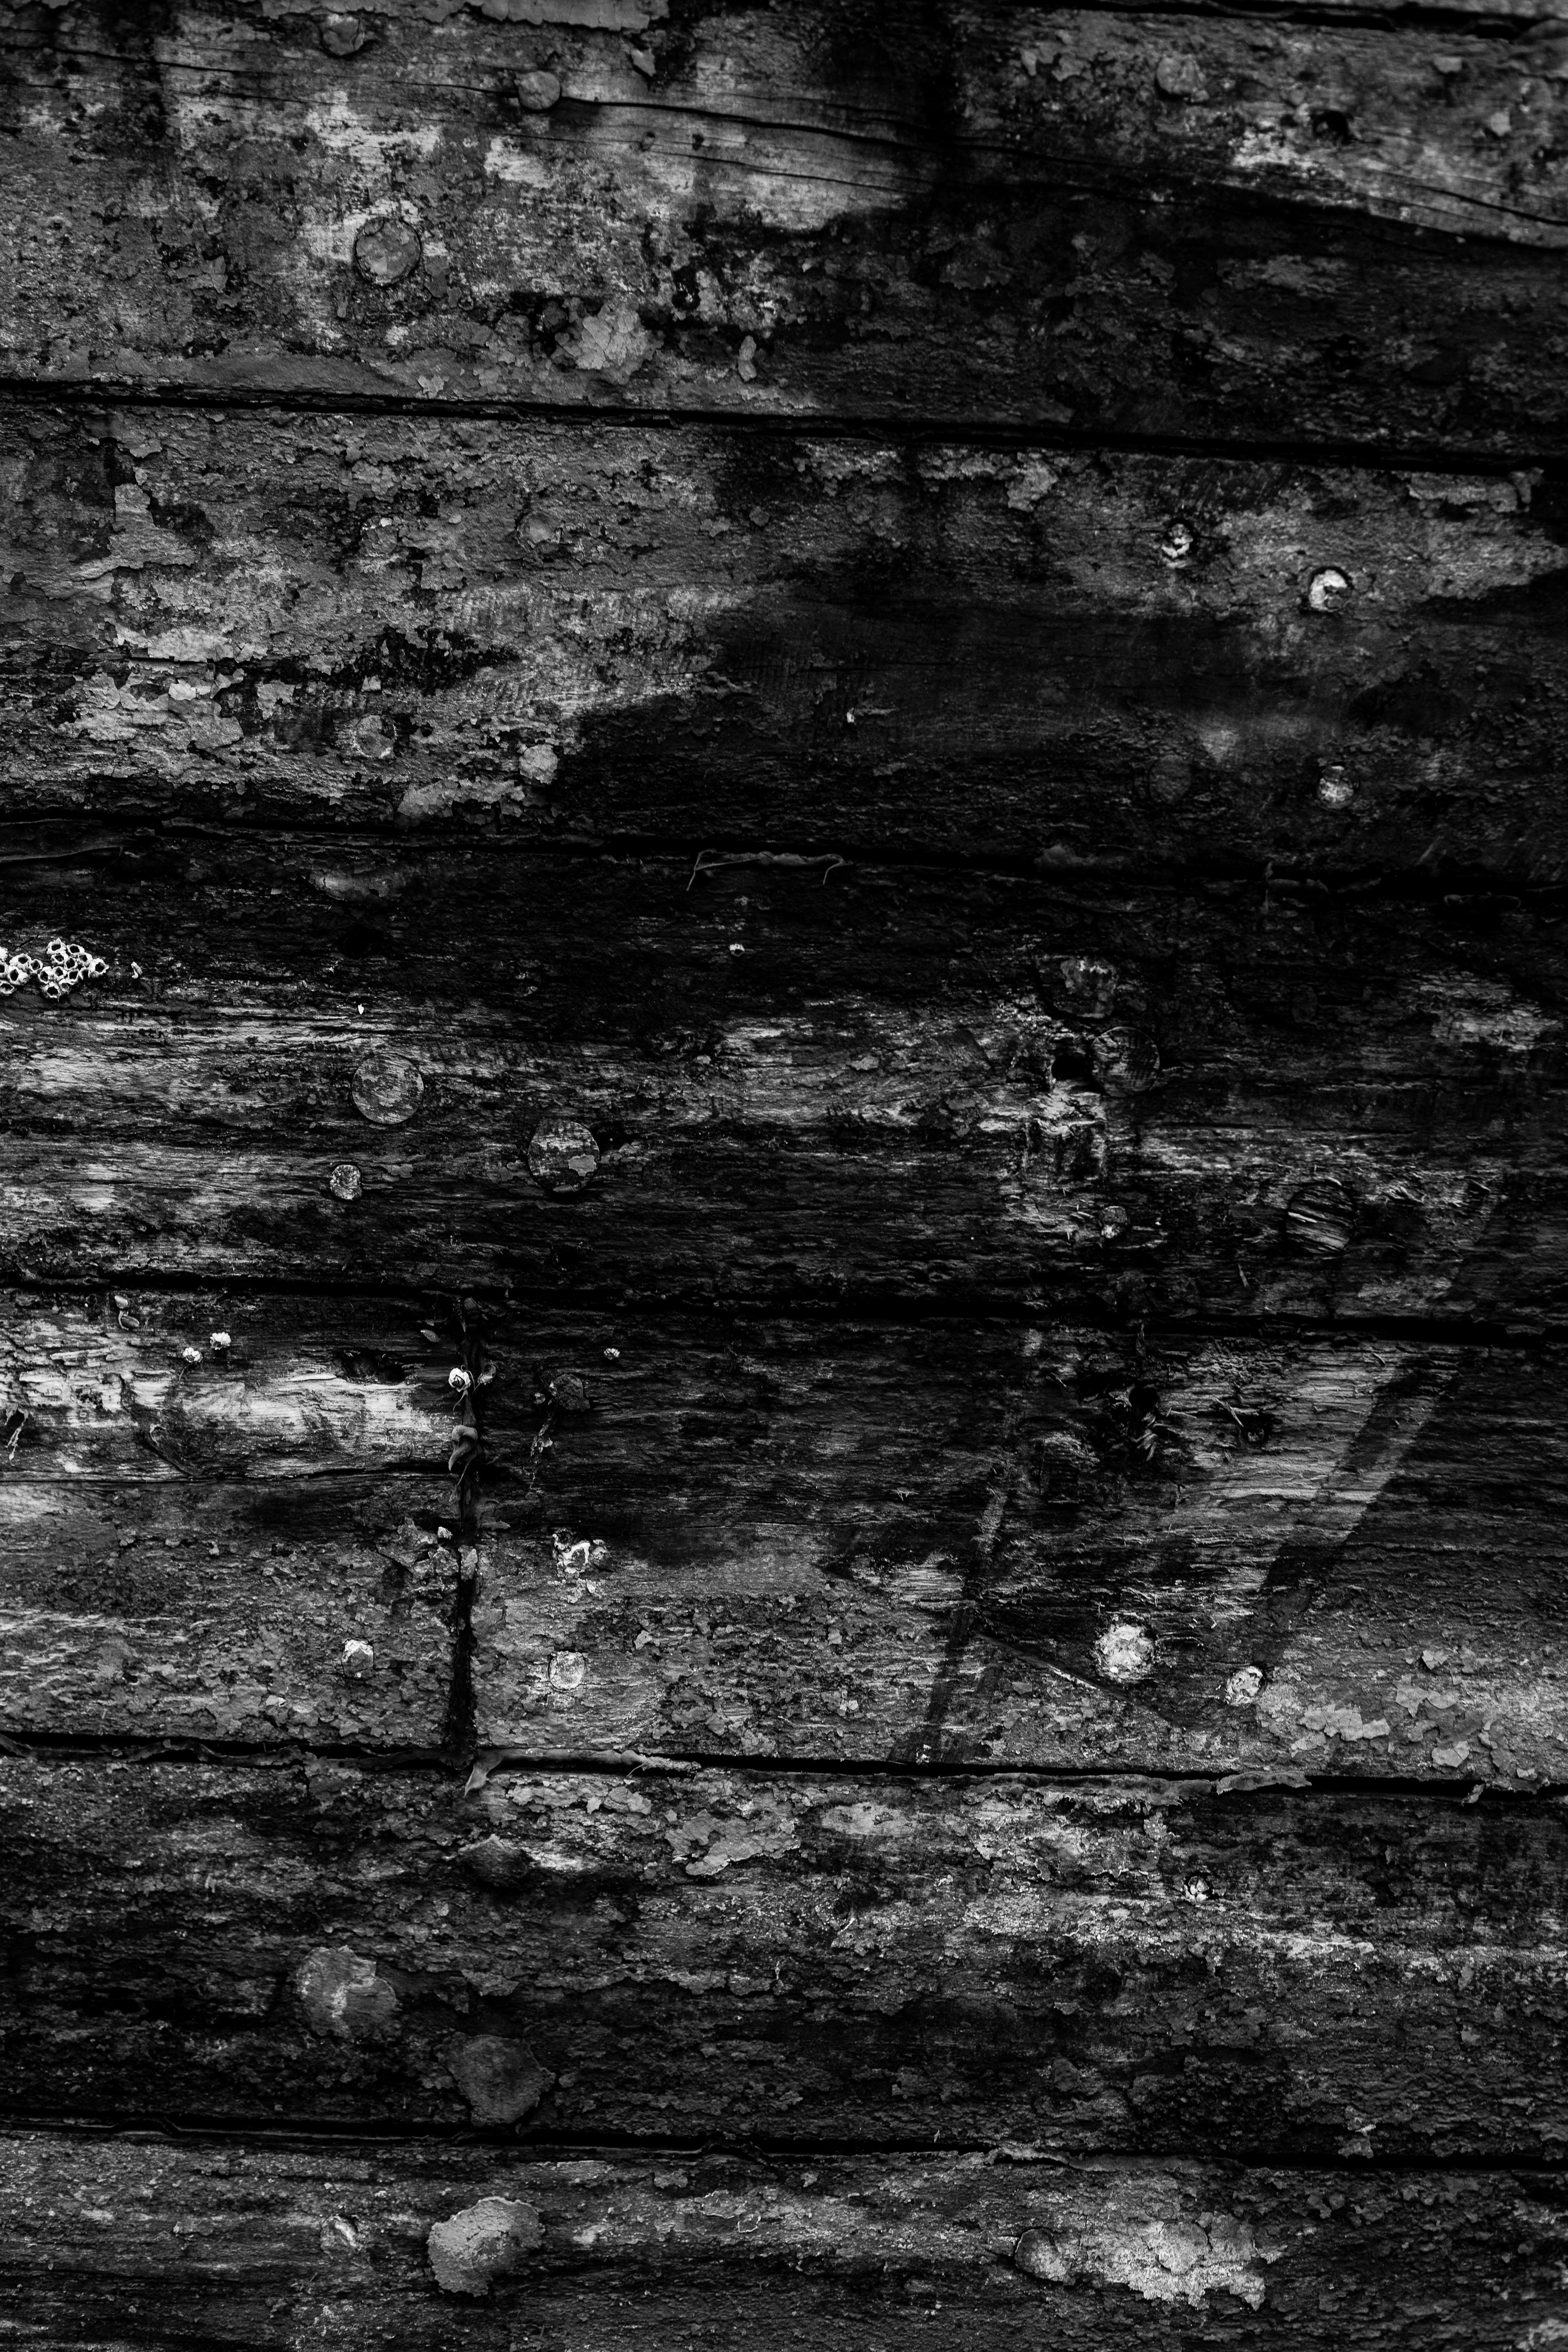 Free Black Grunge Wood Textures | Freebies | Stockvault.net Blog